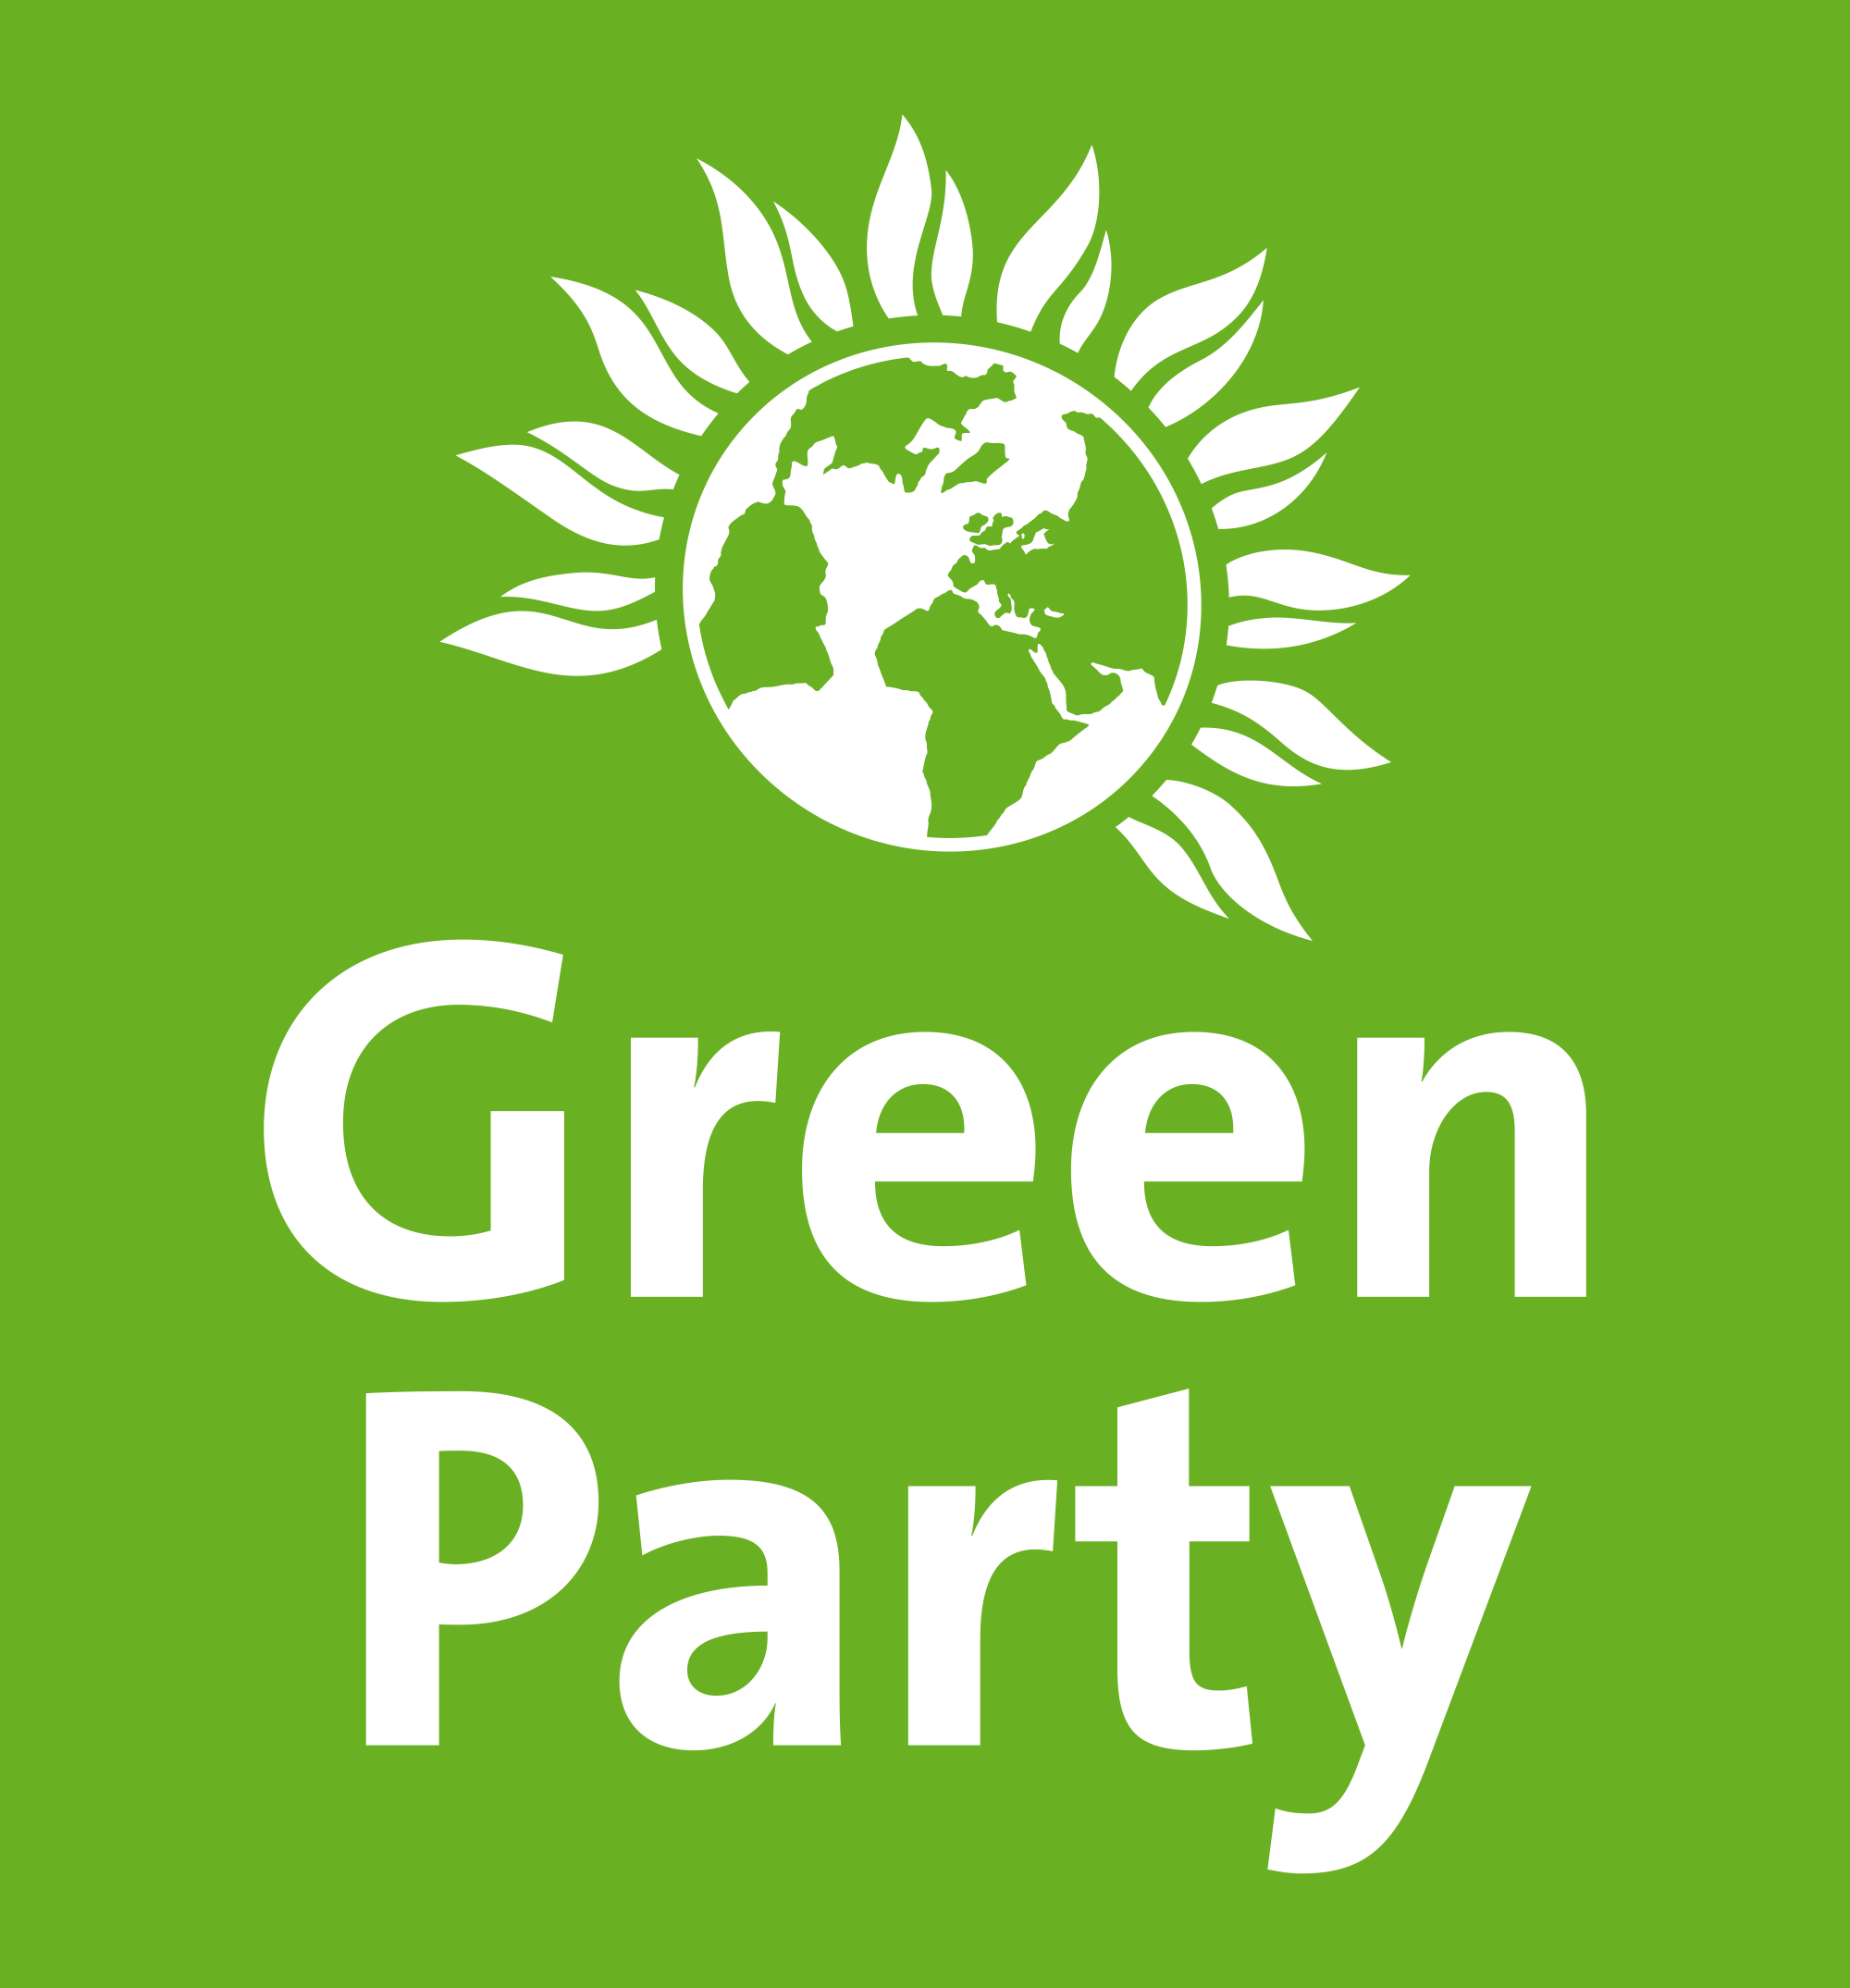 Green Party Logo - Green Party Visual Identity